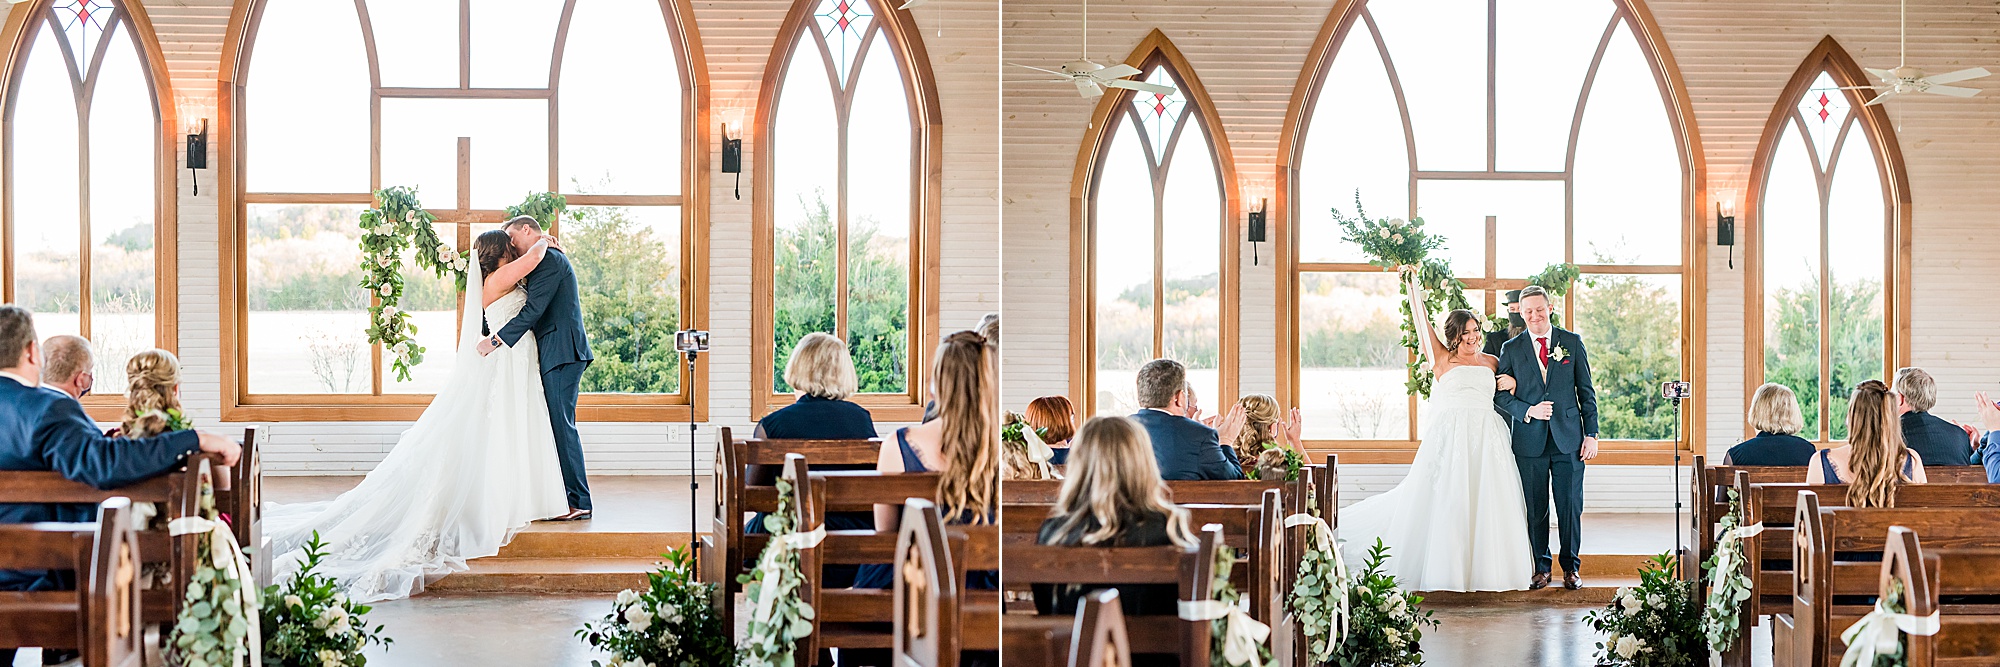 romantic-fun-chapel-wedding-fort-worth